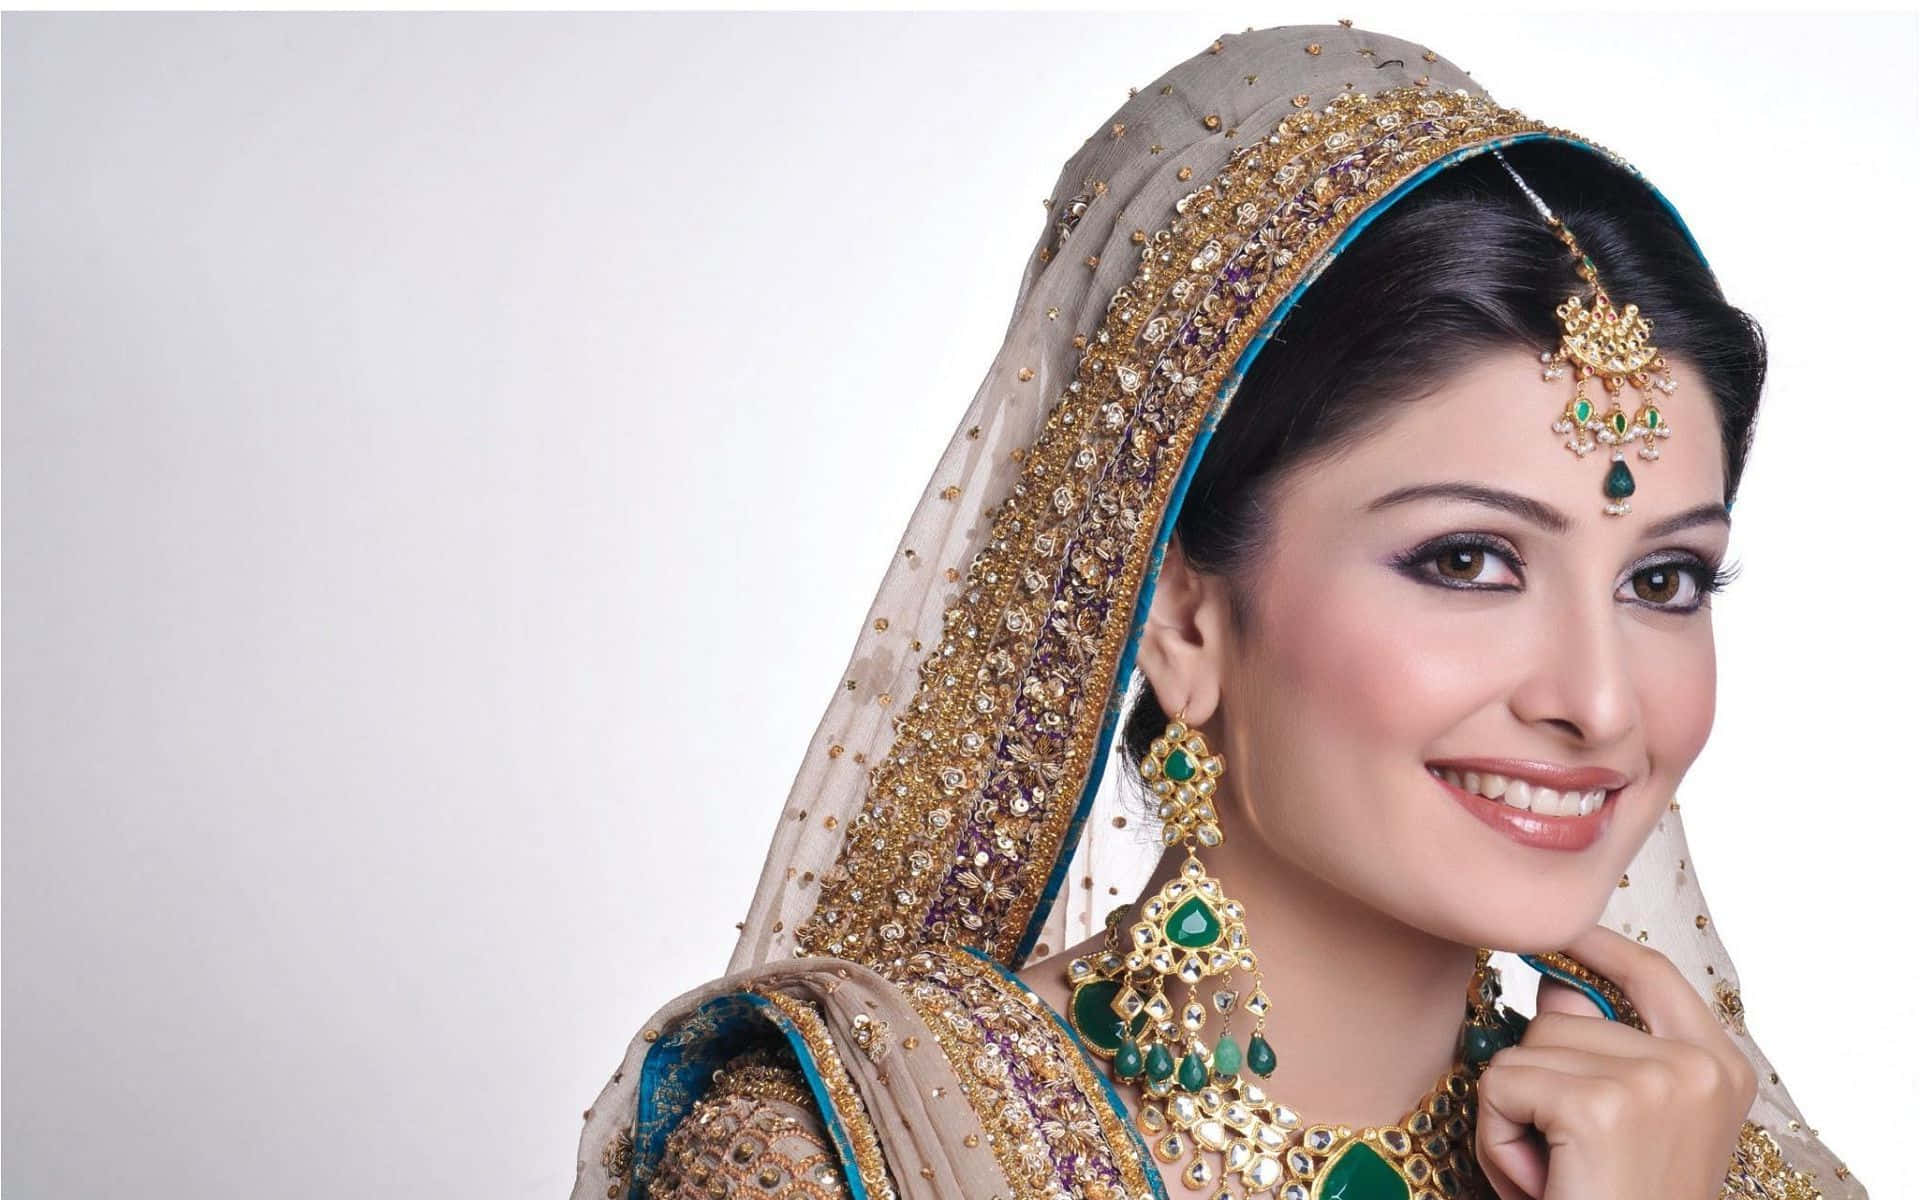 Pakistani Bride In Traditional Bridal Wear